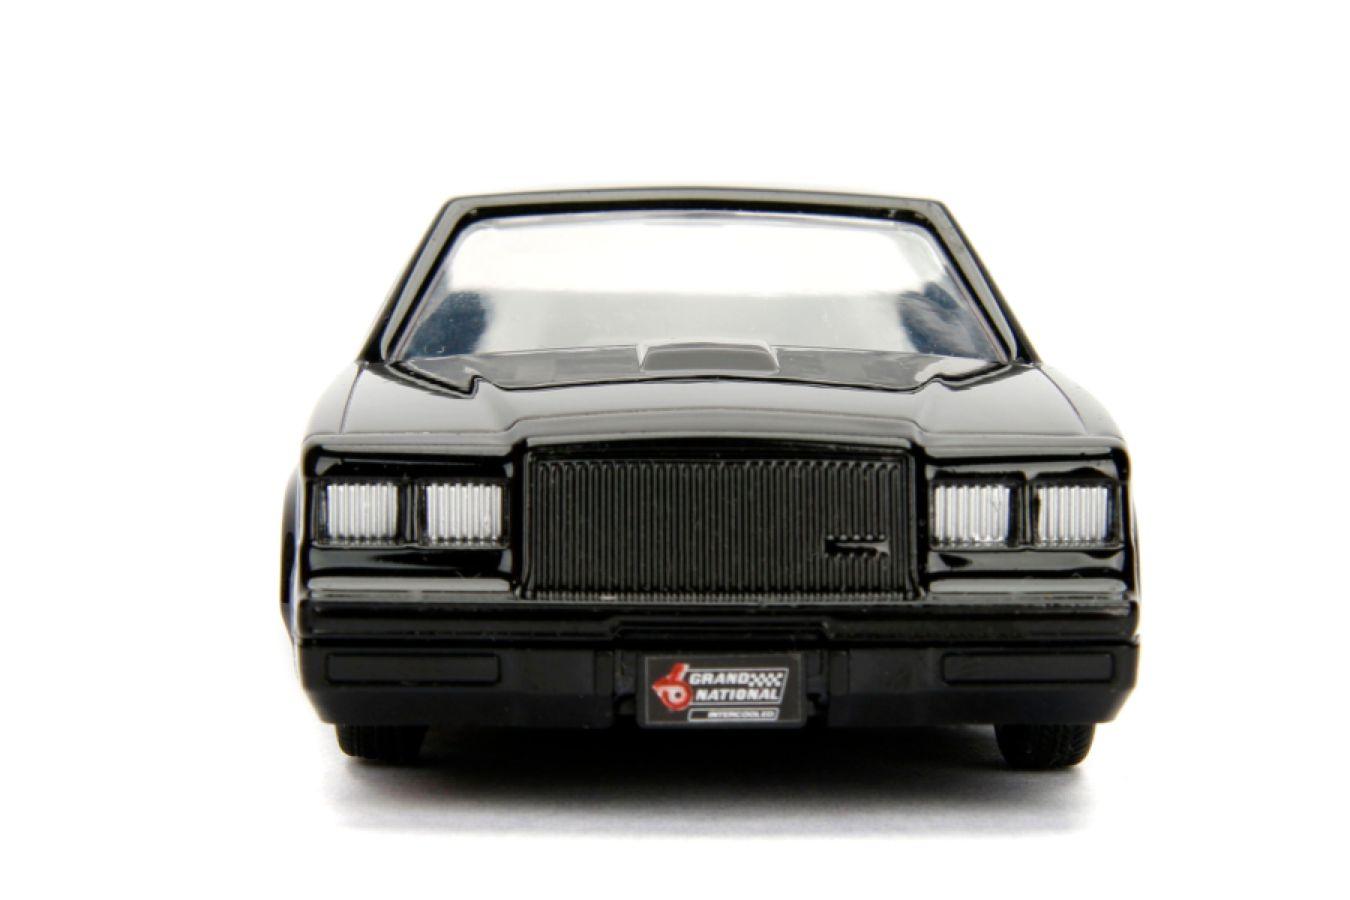 JAD99523 Fast and Furious - 1987 Buick Grand National 1:32 Scale - Jada Toys - Titan Pop Culture